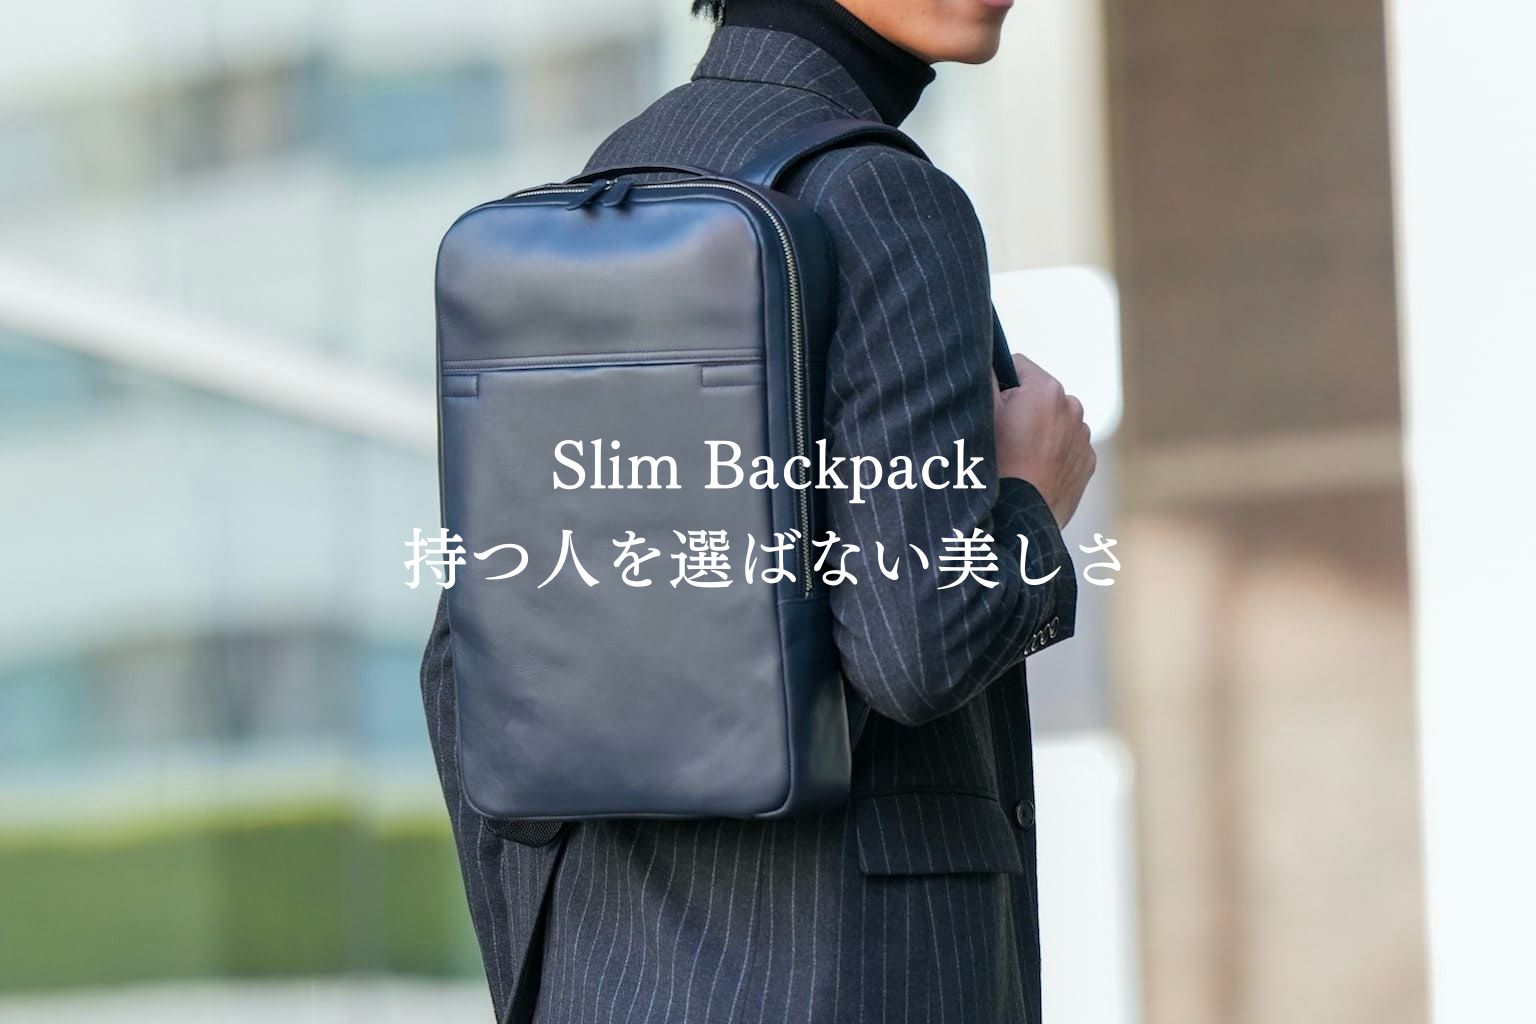 Slim Backpack 持つ人を選ばない美しさ